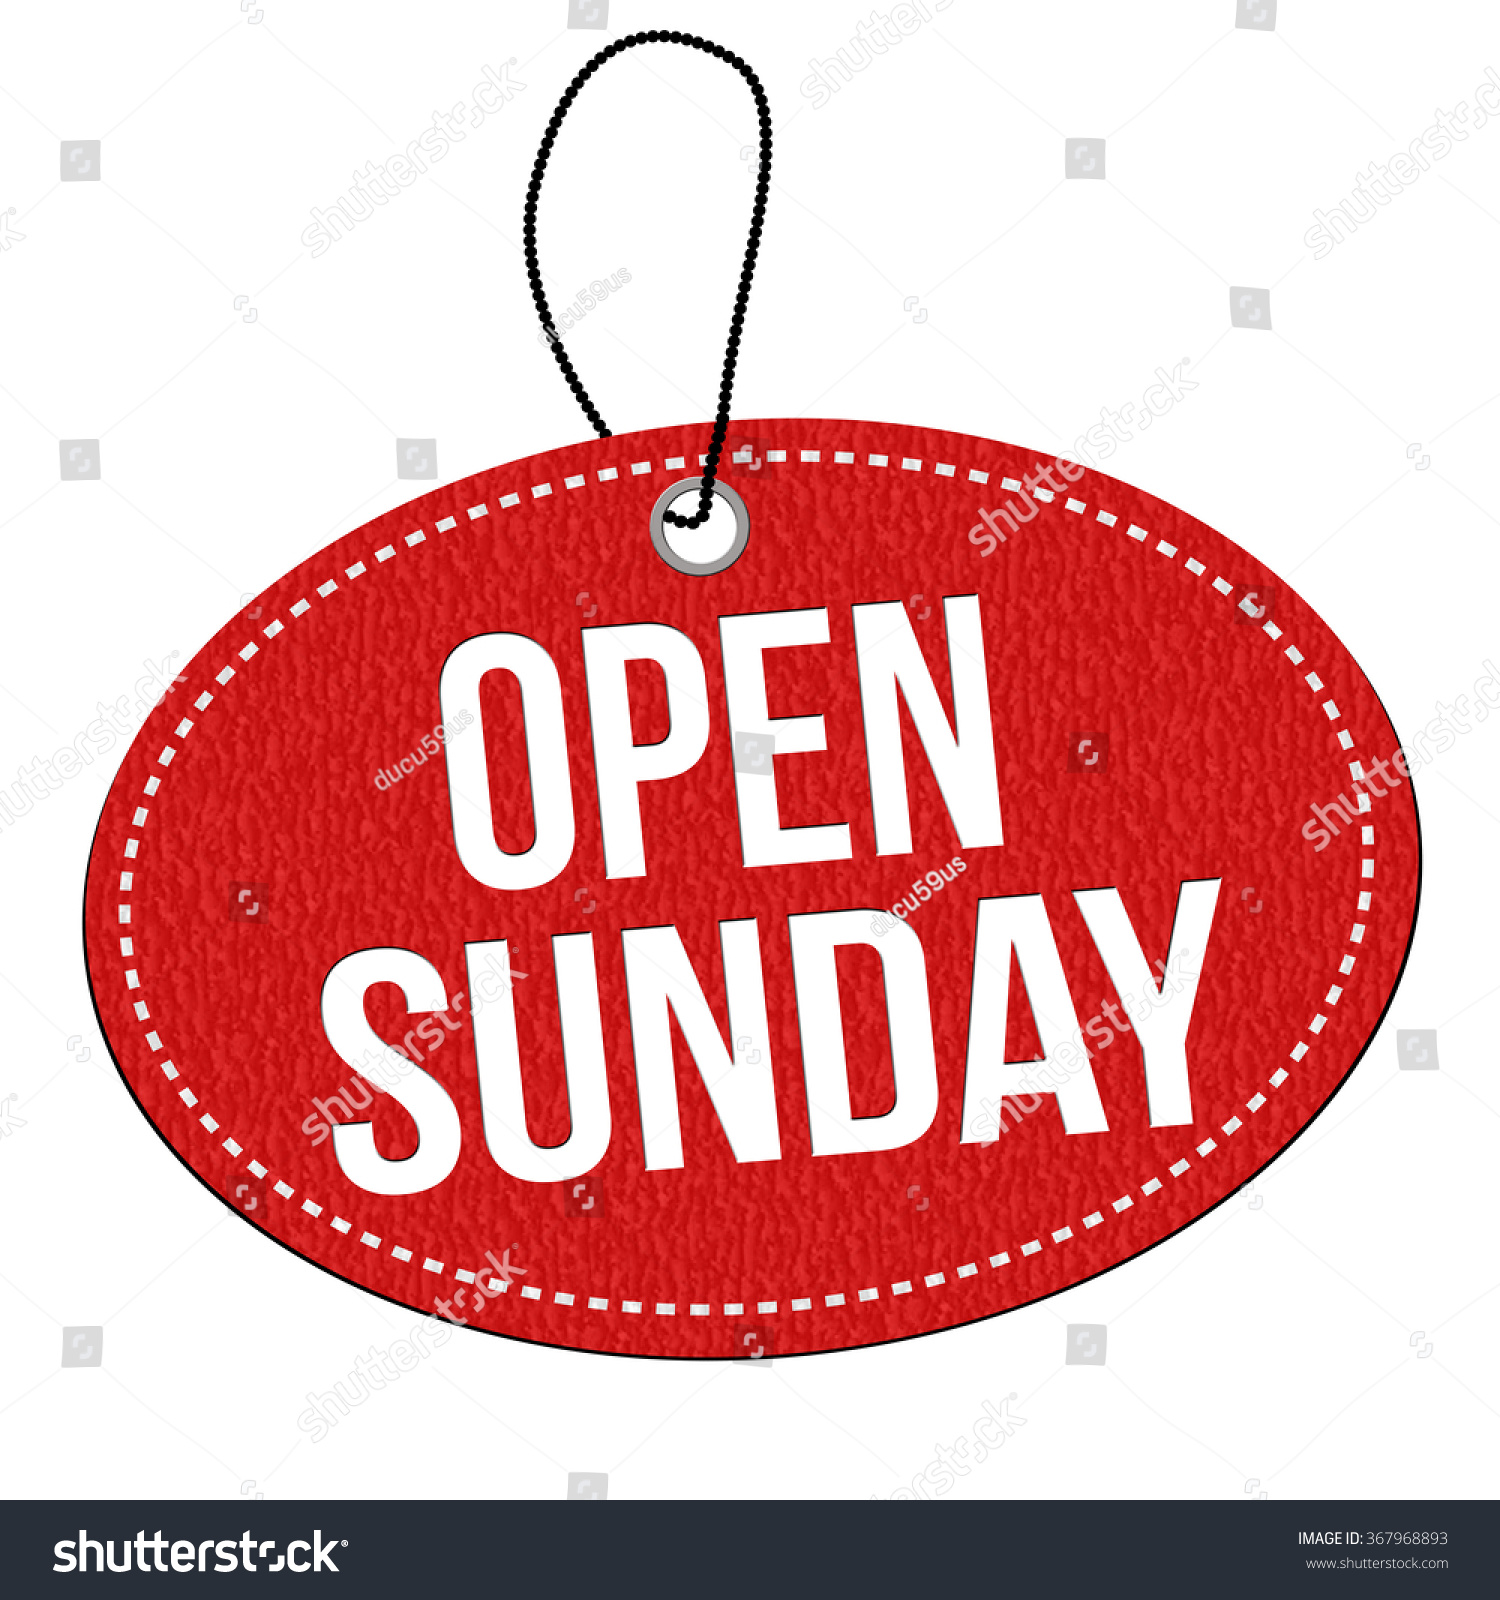 Open Sunday Images